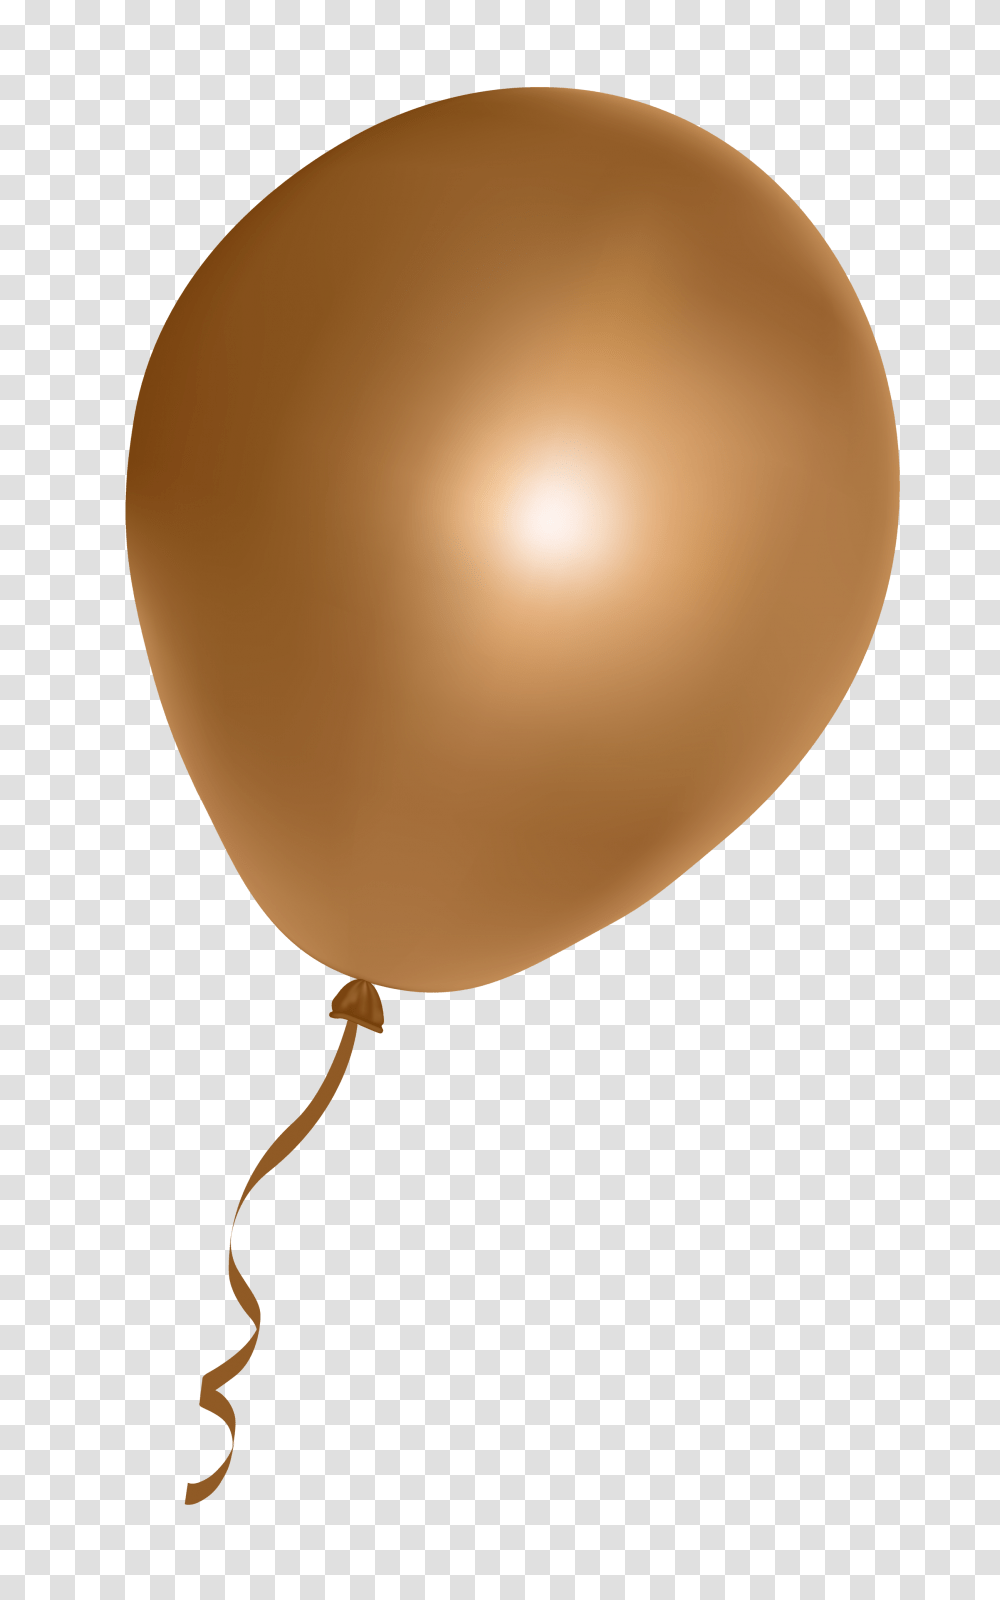 Golden Brown Balloon Image, Lamp Transparent Png